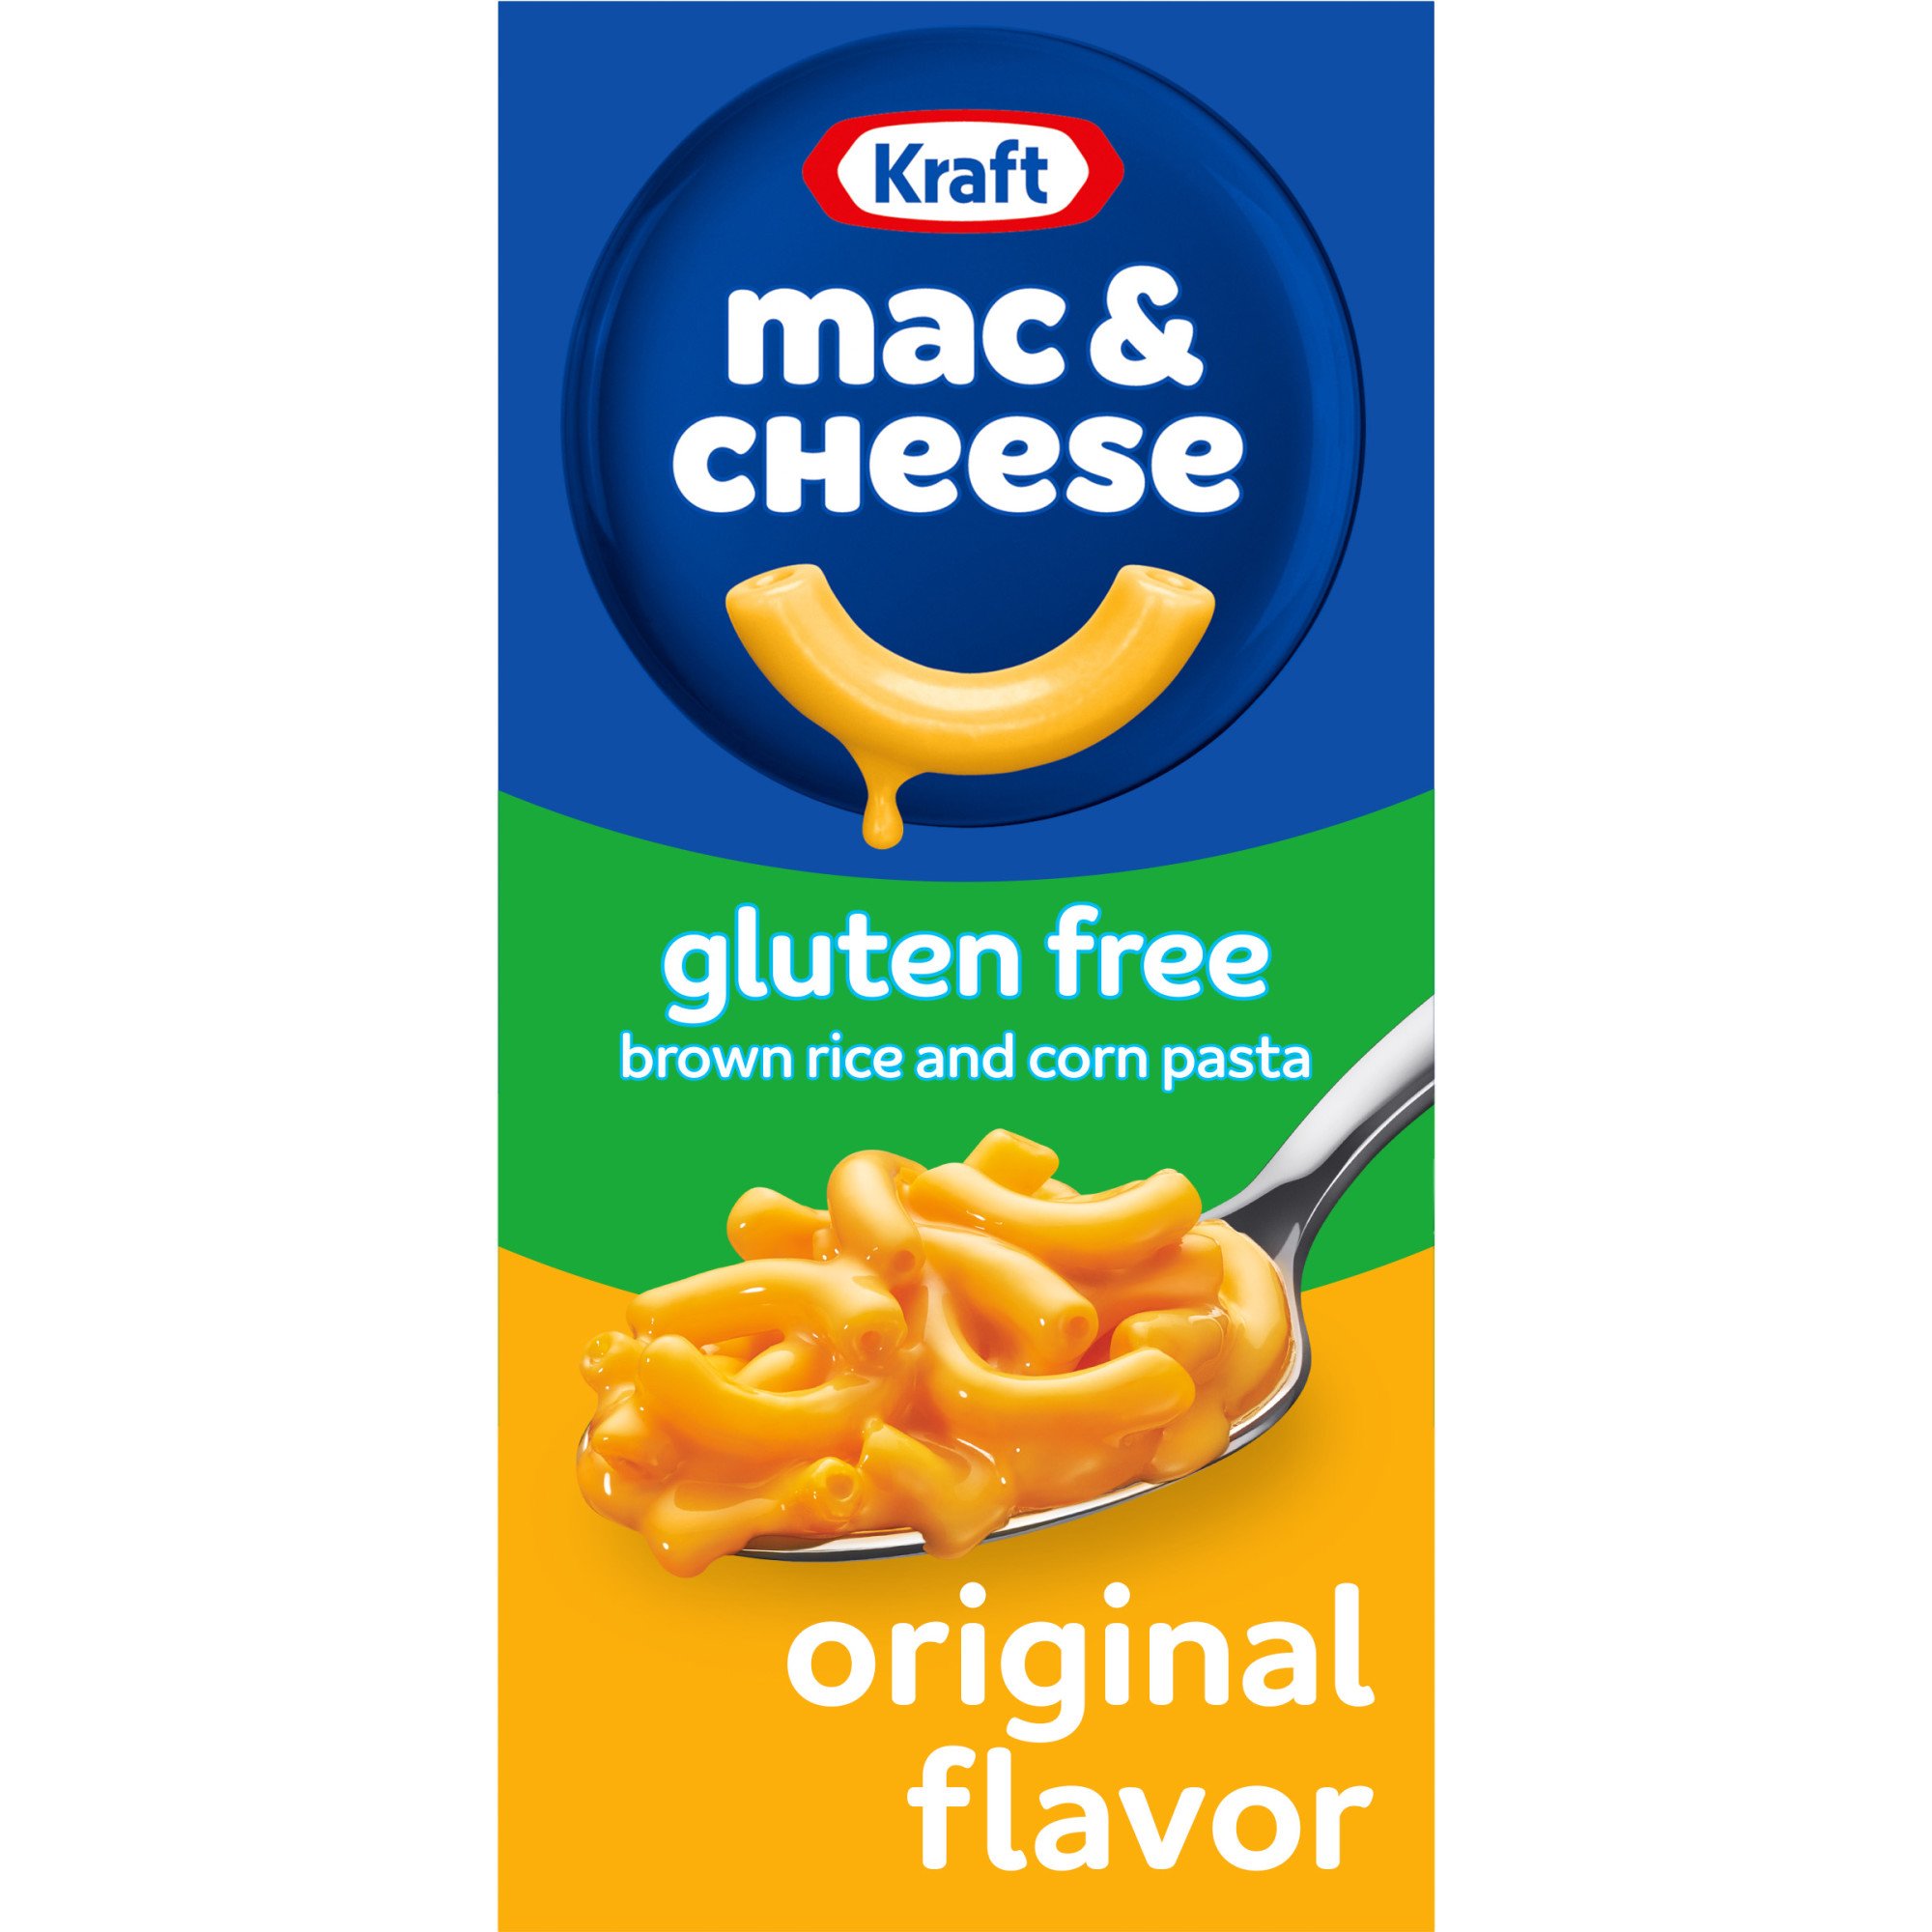 Kraft Original Flavor Macaroni & Cheese Dinner - Shop Pantry Meals at H-E-B